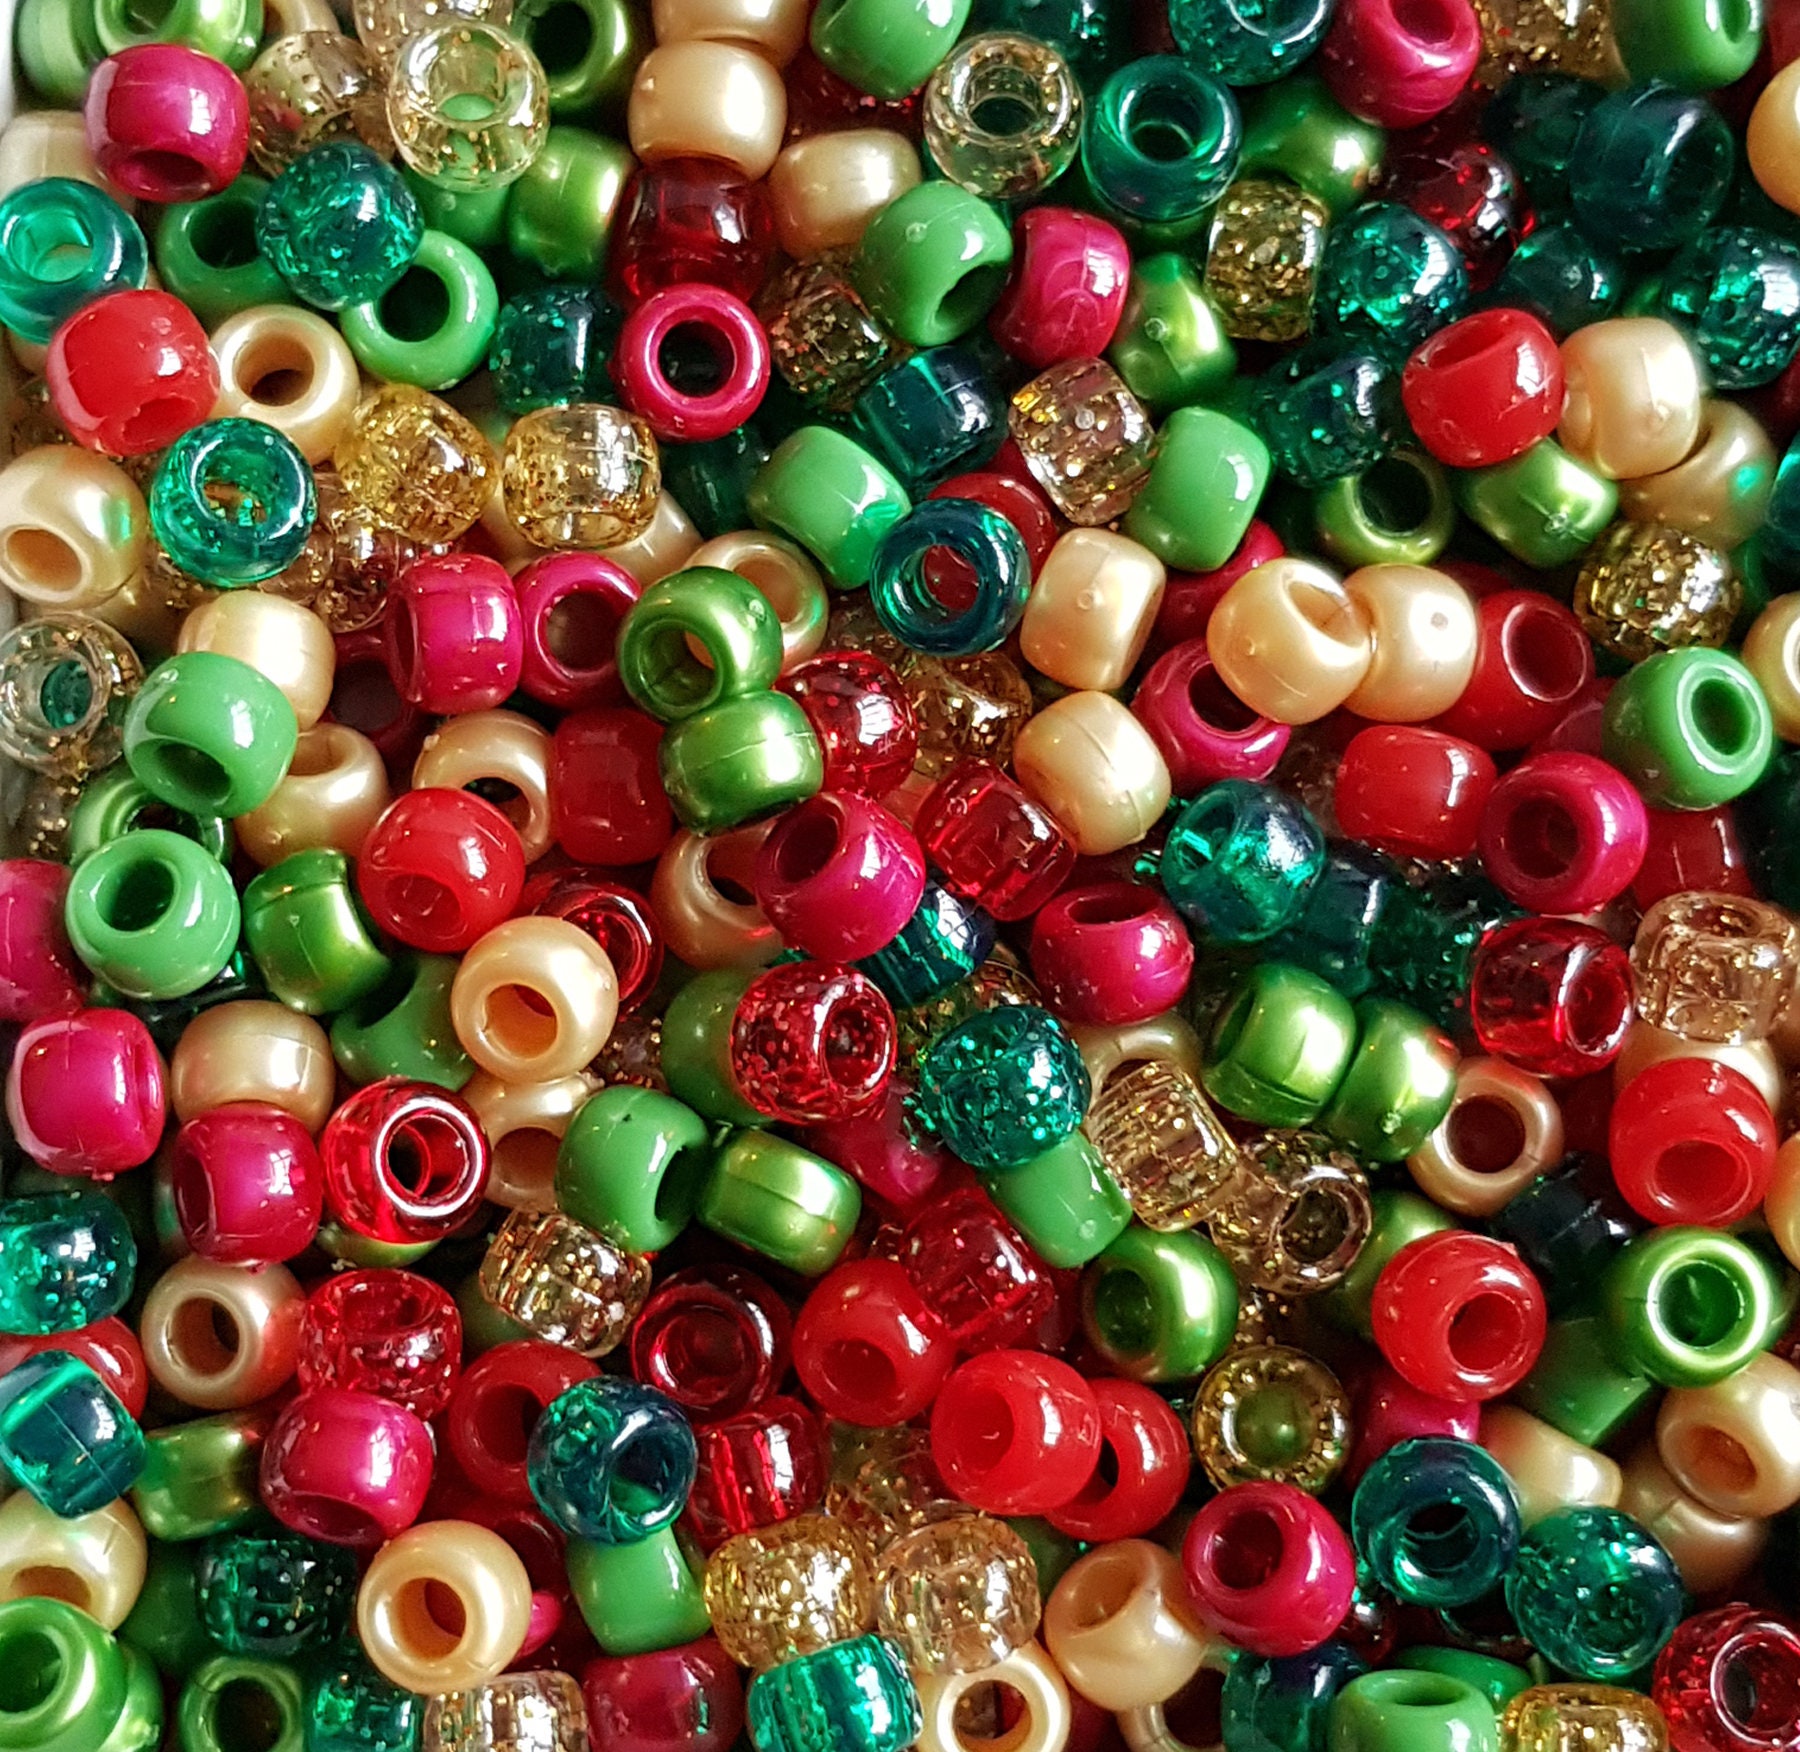 Unique Beads Mystery Mix Assortment Gold Brown Unique Asst for